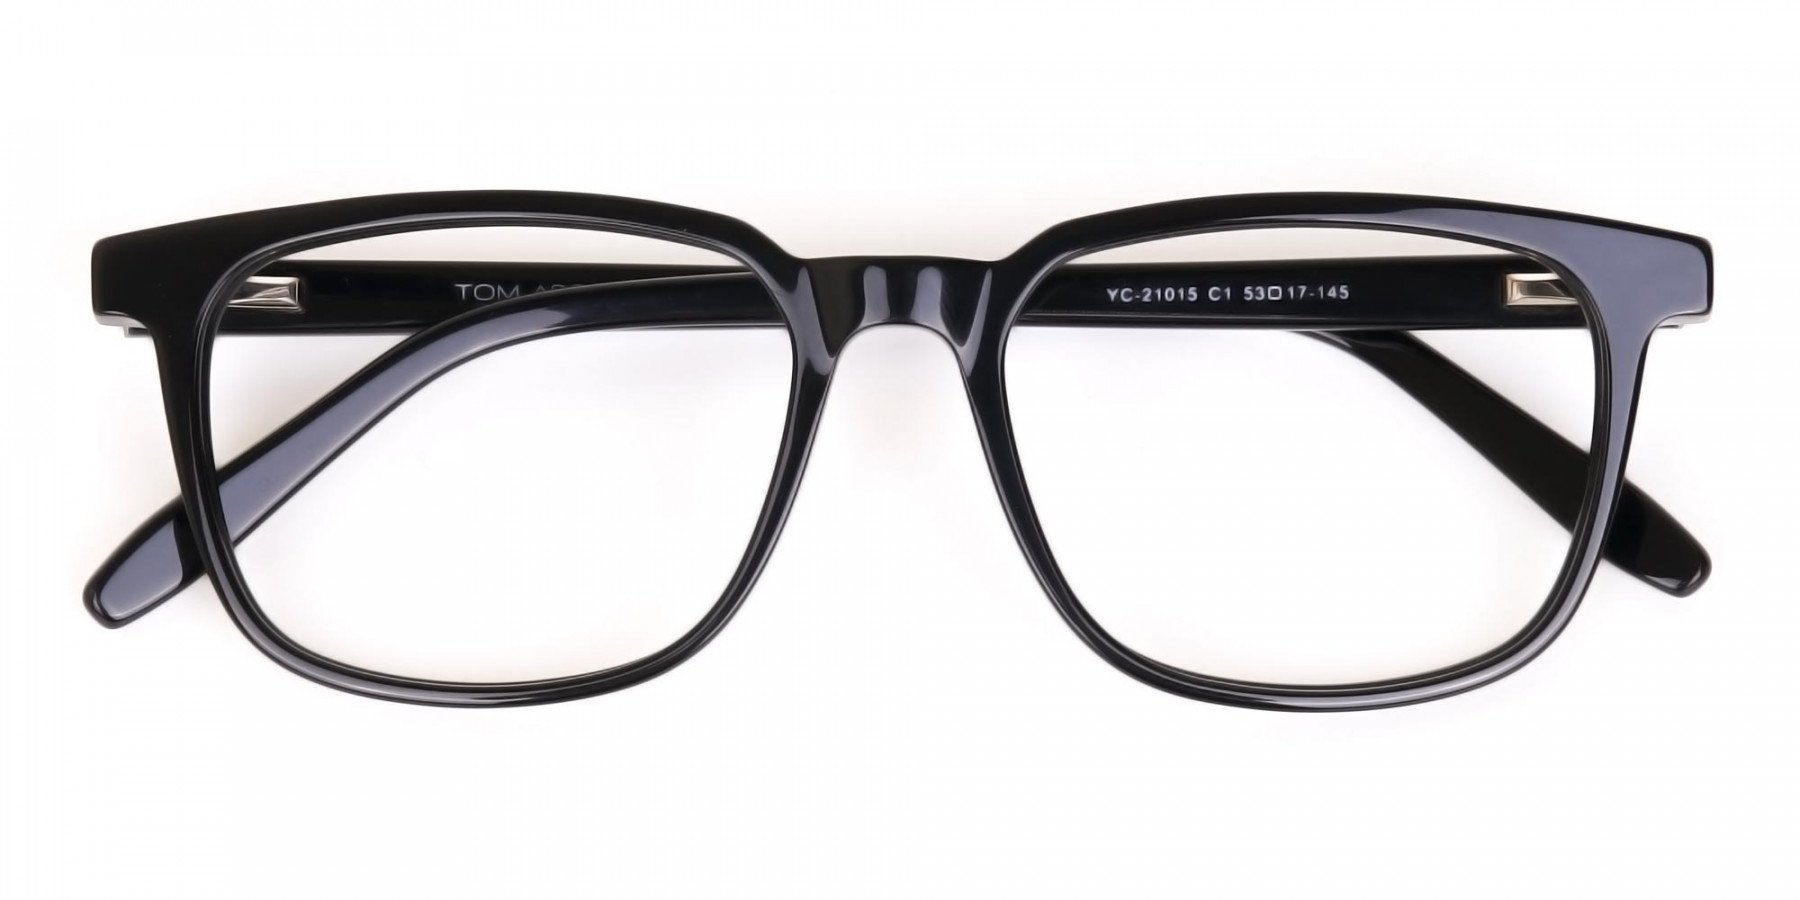 Black Acetate Rectangle Glasses Frame Unisex-1